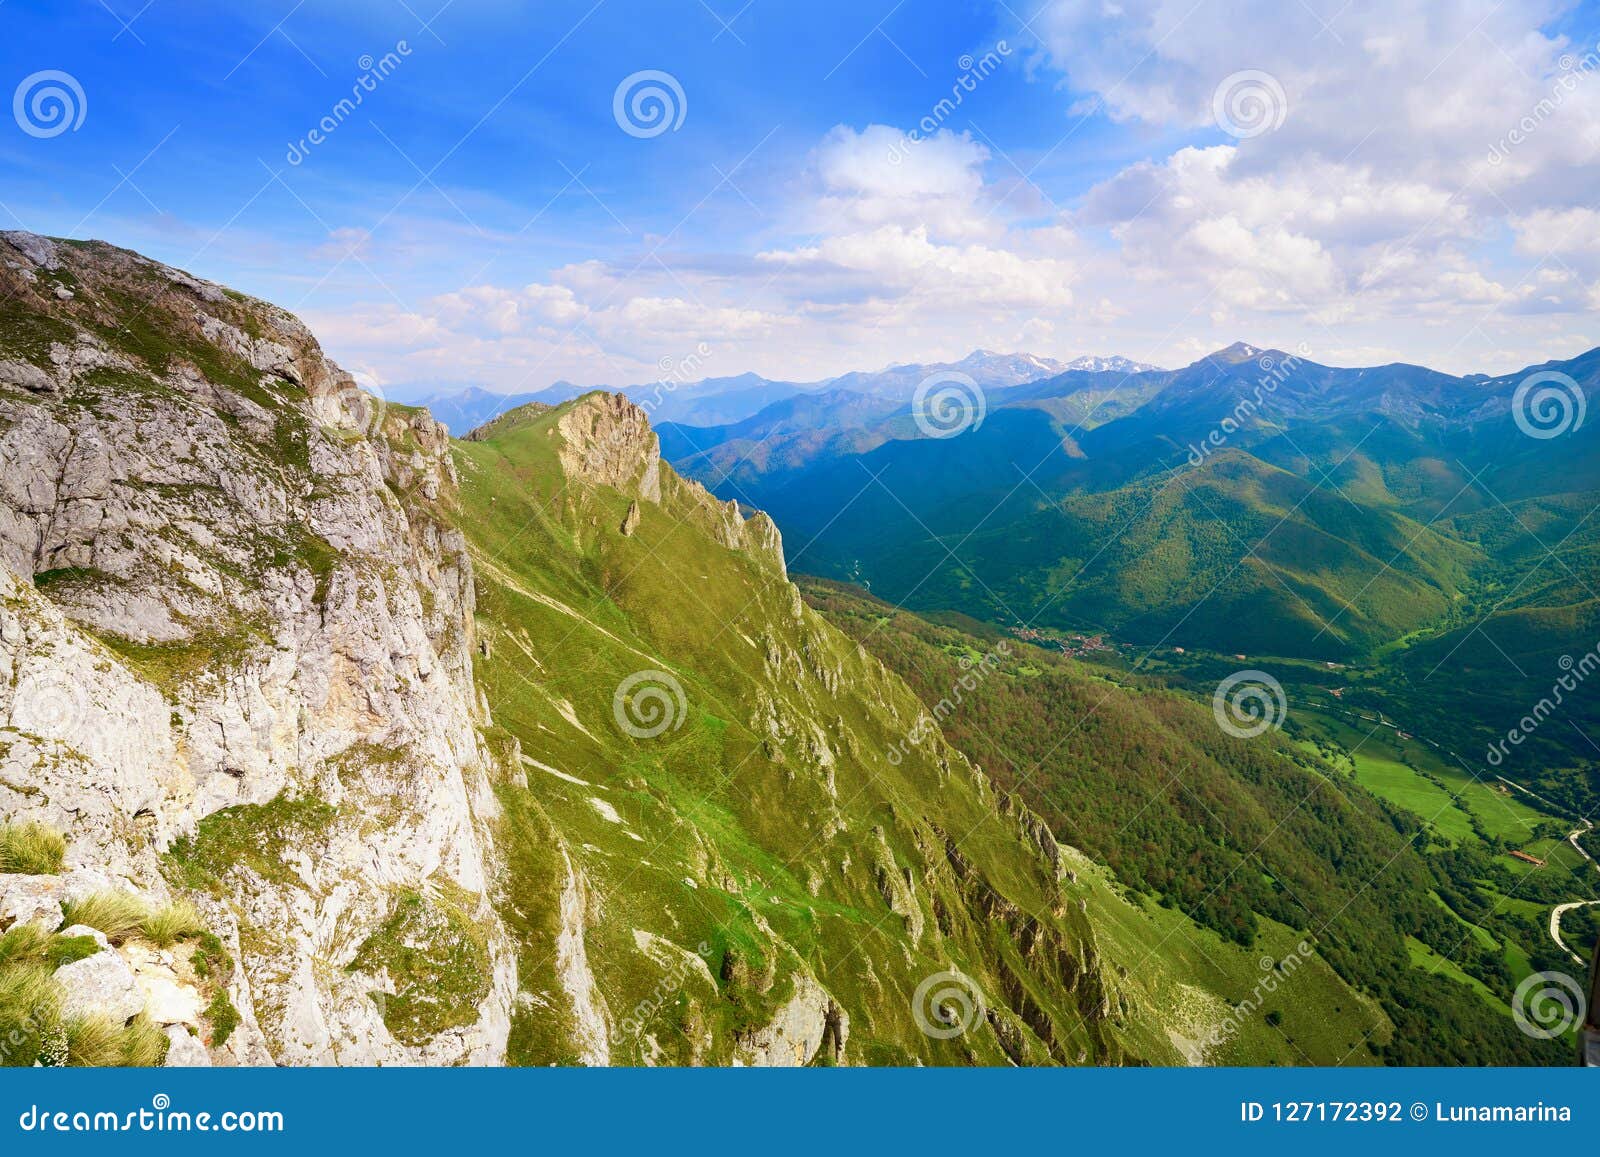 fuente de mountains in cantabria spain